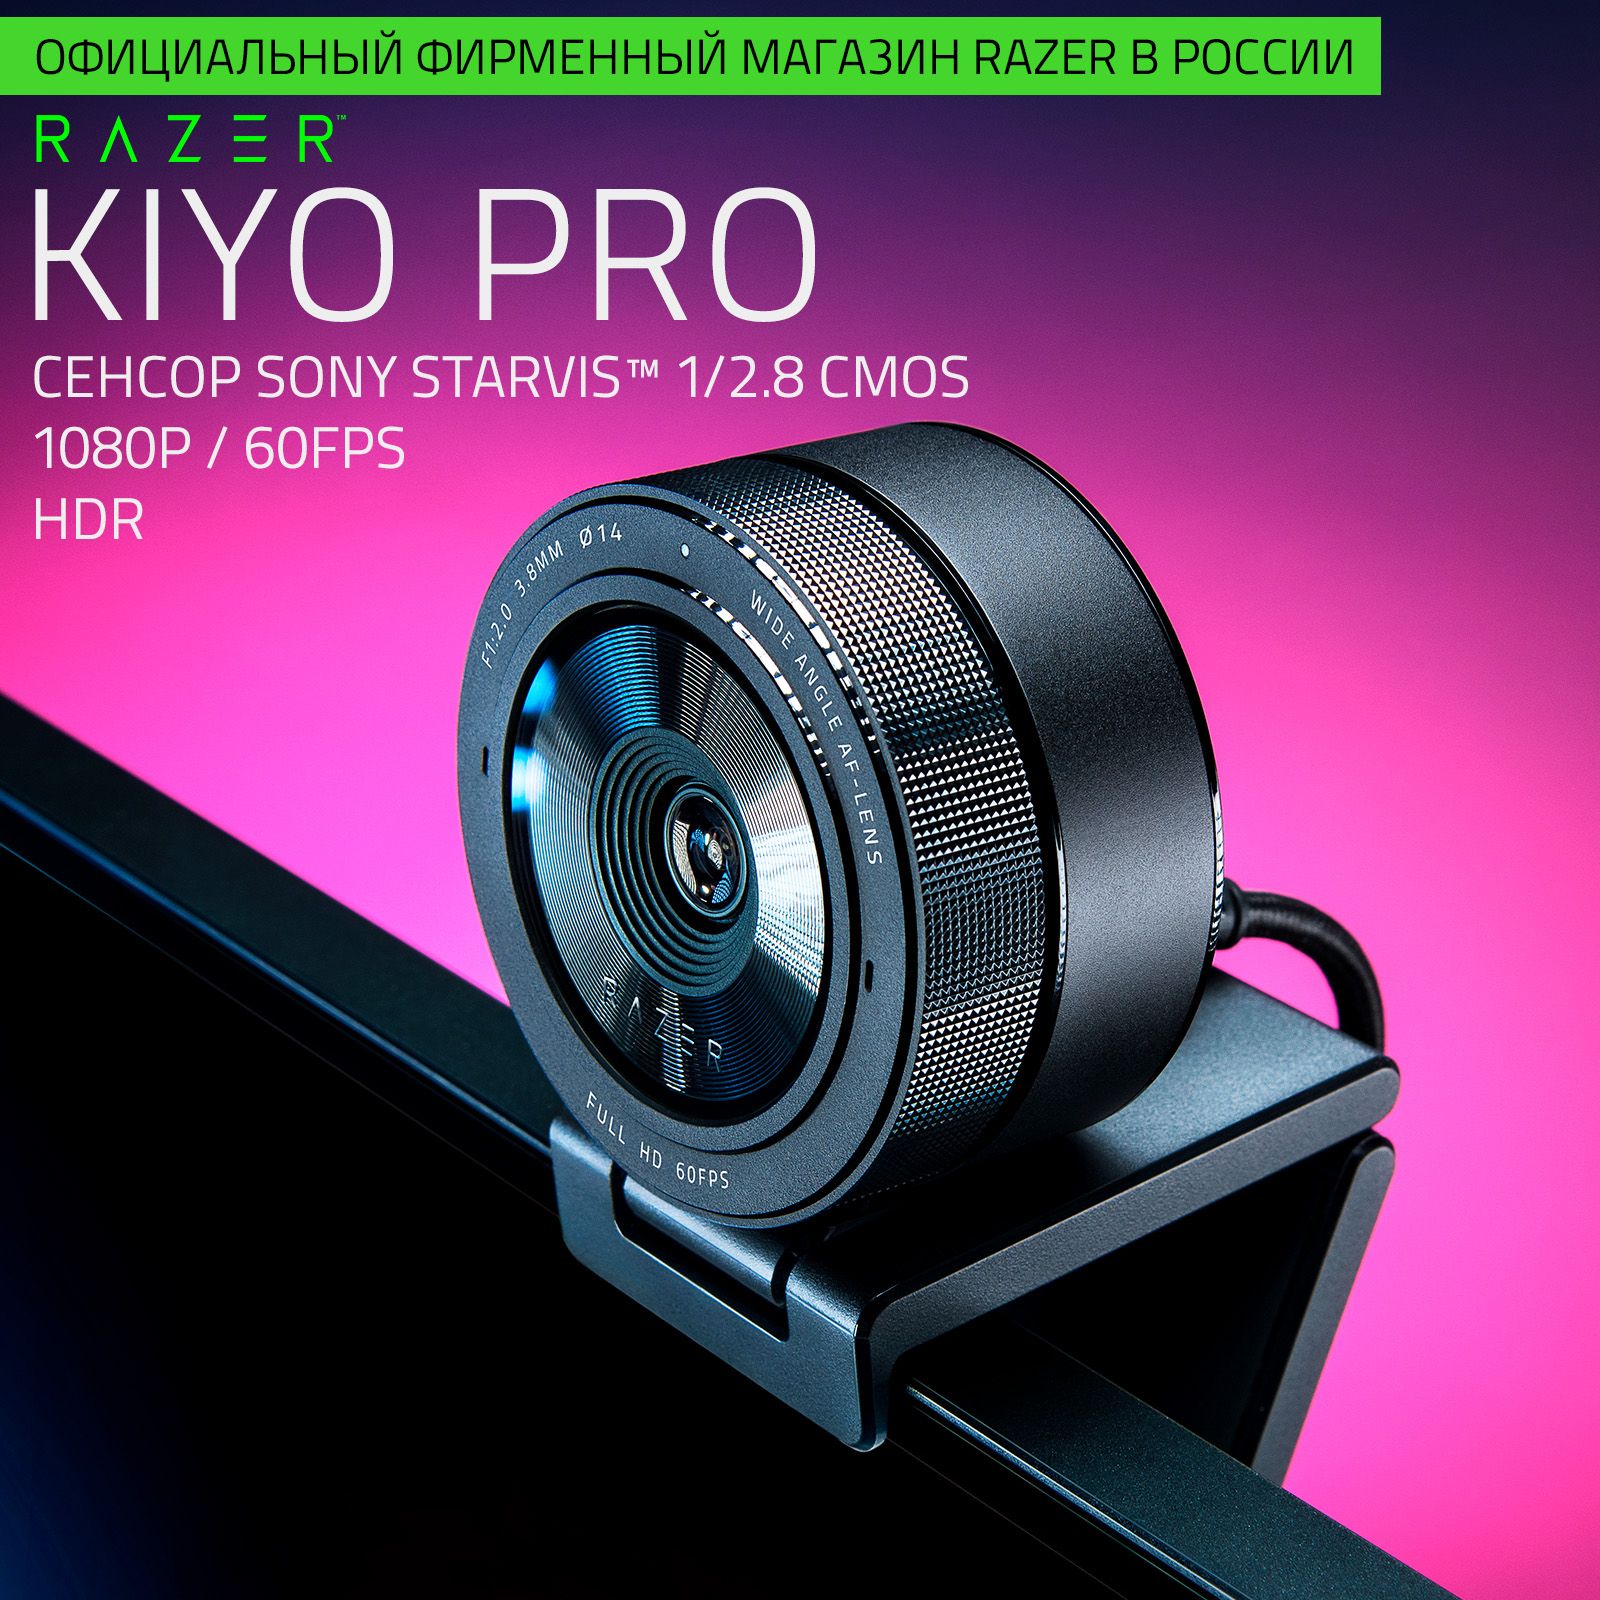 Веб-камераRazerKiyoPro(Black)FullHD1080p60FPS,широкоугольная103гр,HDR,наклон,установканамонитор,настолеинаштатив,H.264,USB3.0